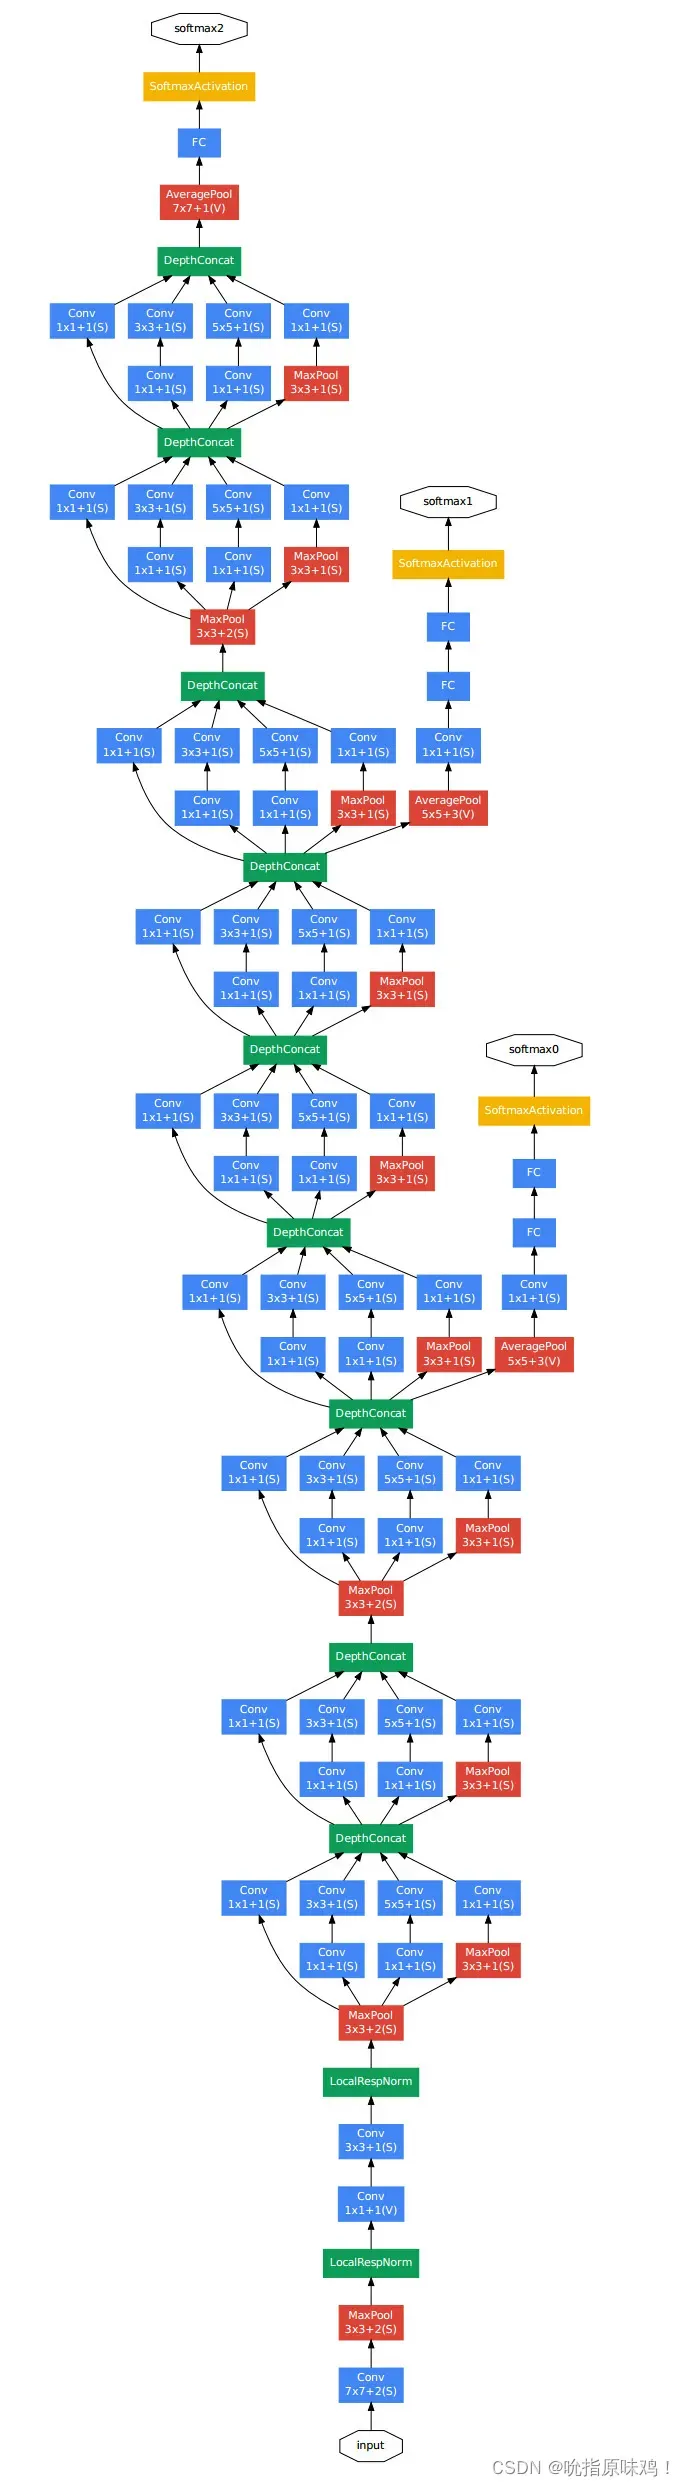 GoogLeNet网络结构示意图